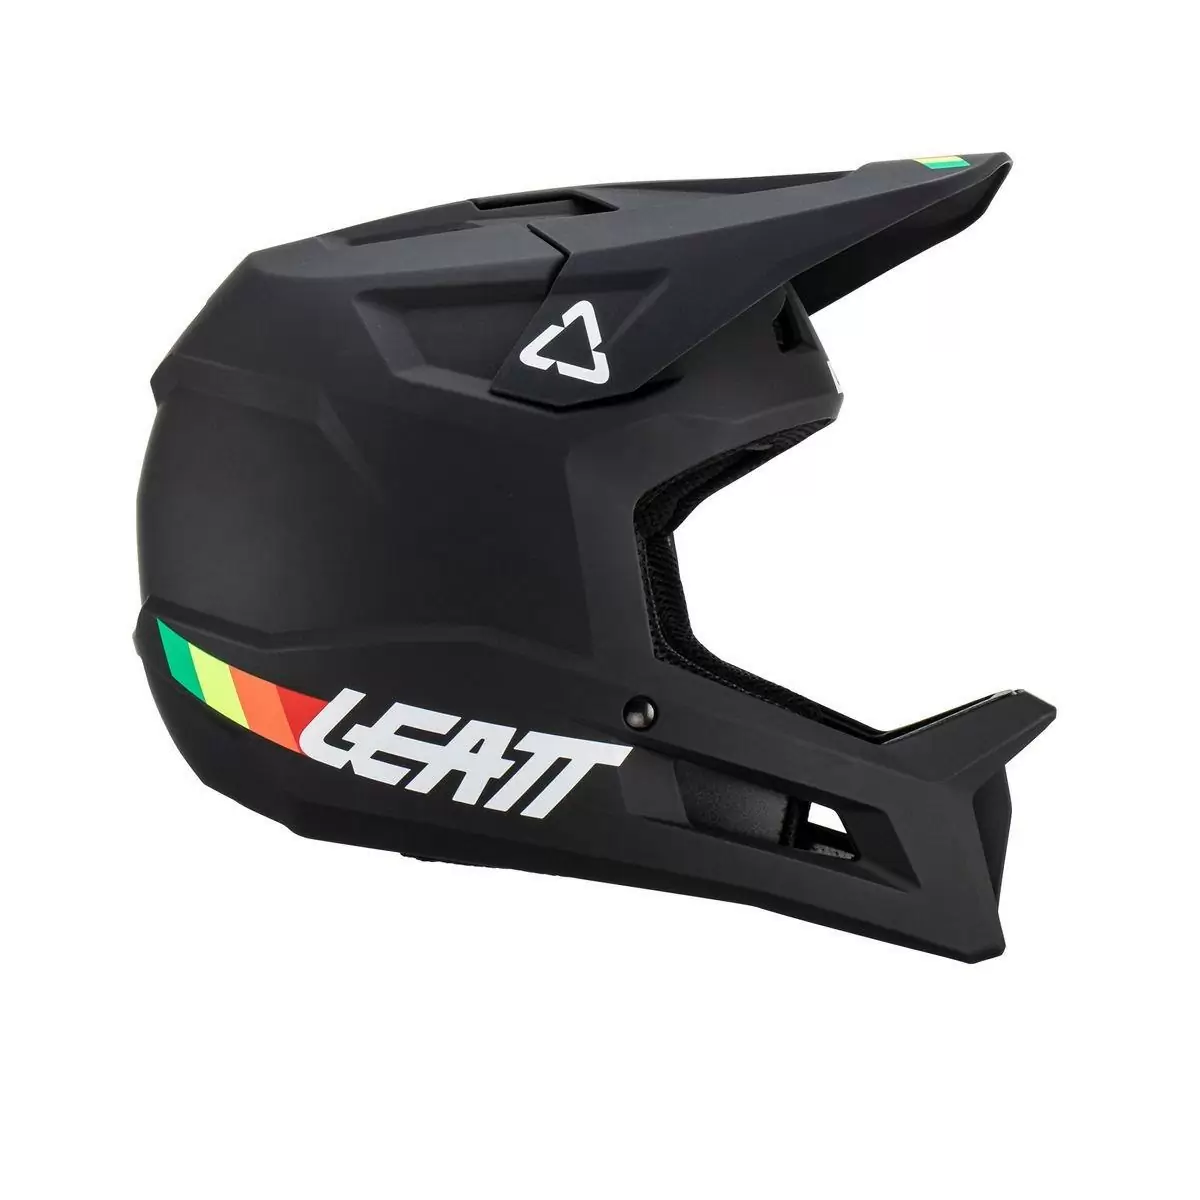 Gravity 1.0 MTB Fullface Helmet Stealth Black Size XS (53-54cm) #2